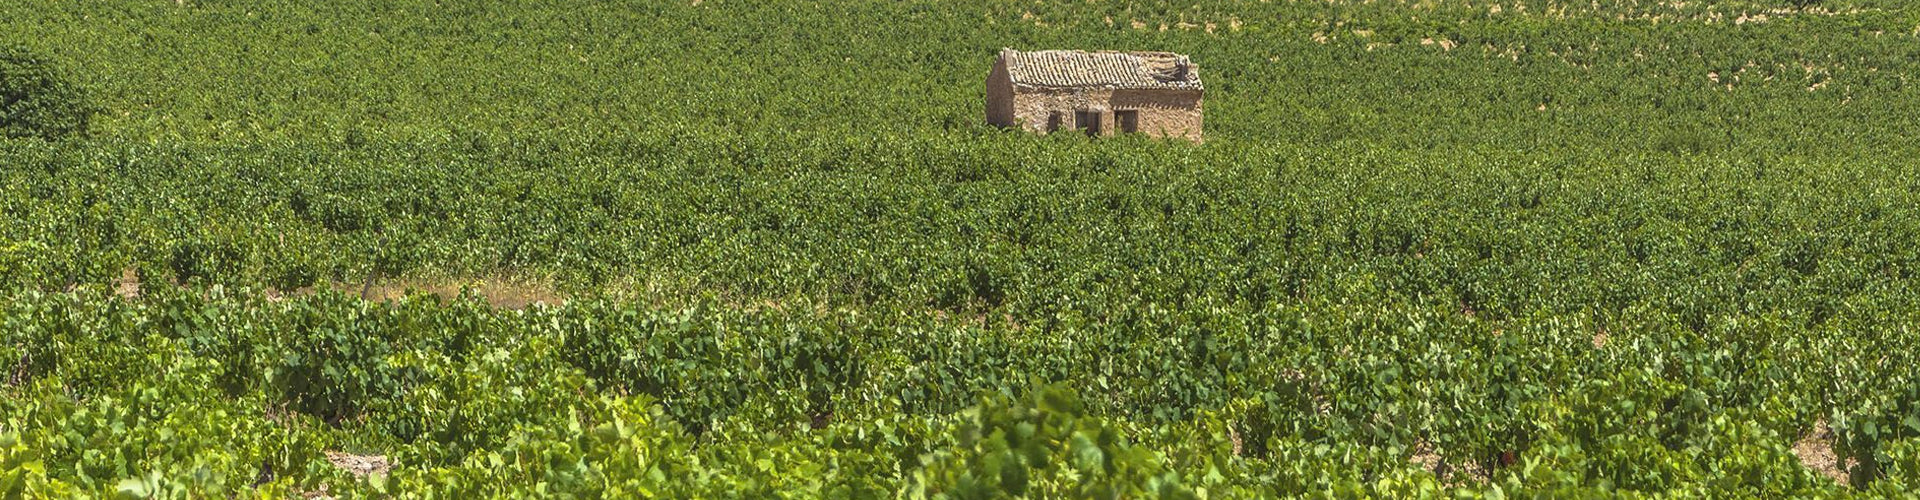 Finca Bacara Vineyards in Jumilla DOP Spain